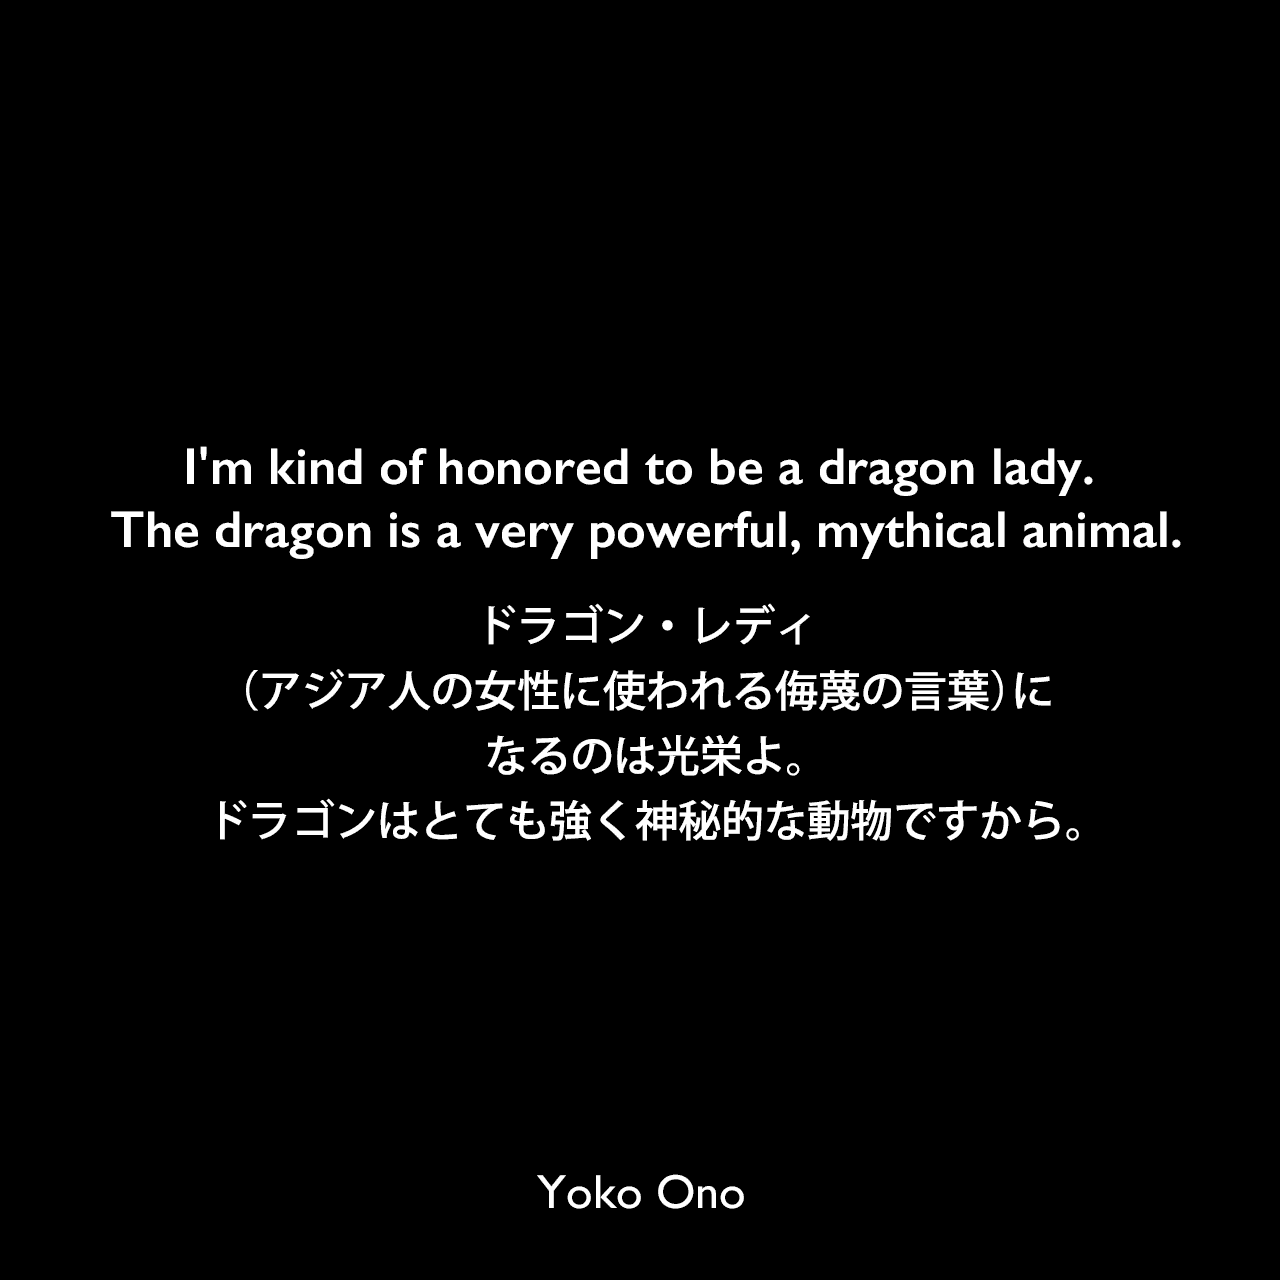 I'm kind of honored to be a dragon lady. The dragon is a very powerful, mythical animal.ドラゴン・レディ（アジア人の女性に使われる侮蔑の言葉）になるのは光栄よ。ドラゴンはとても強く神秘的な動物ですから。Yoko Ono